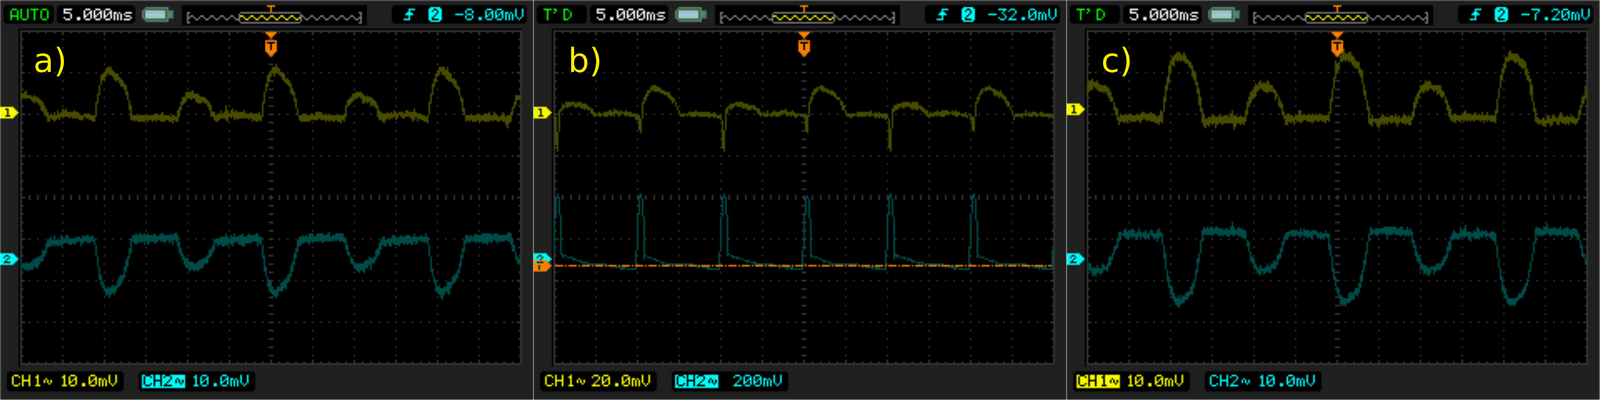 Modular synth PSU output waveforms